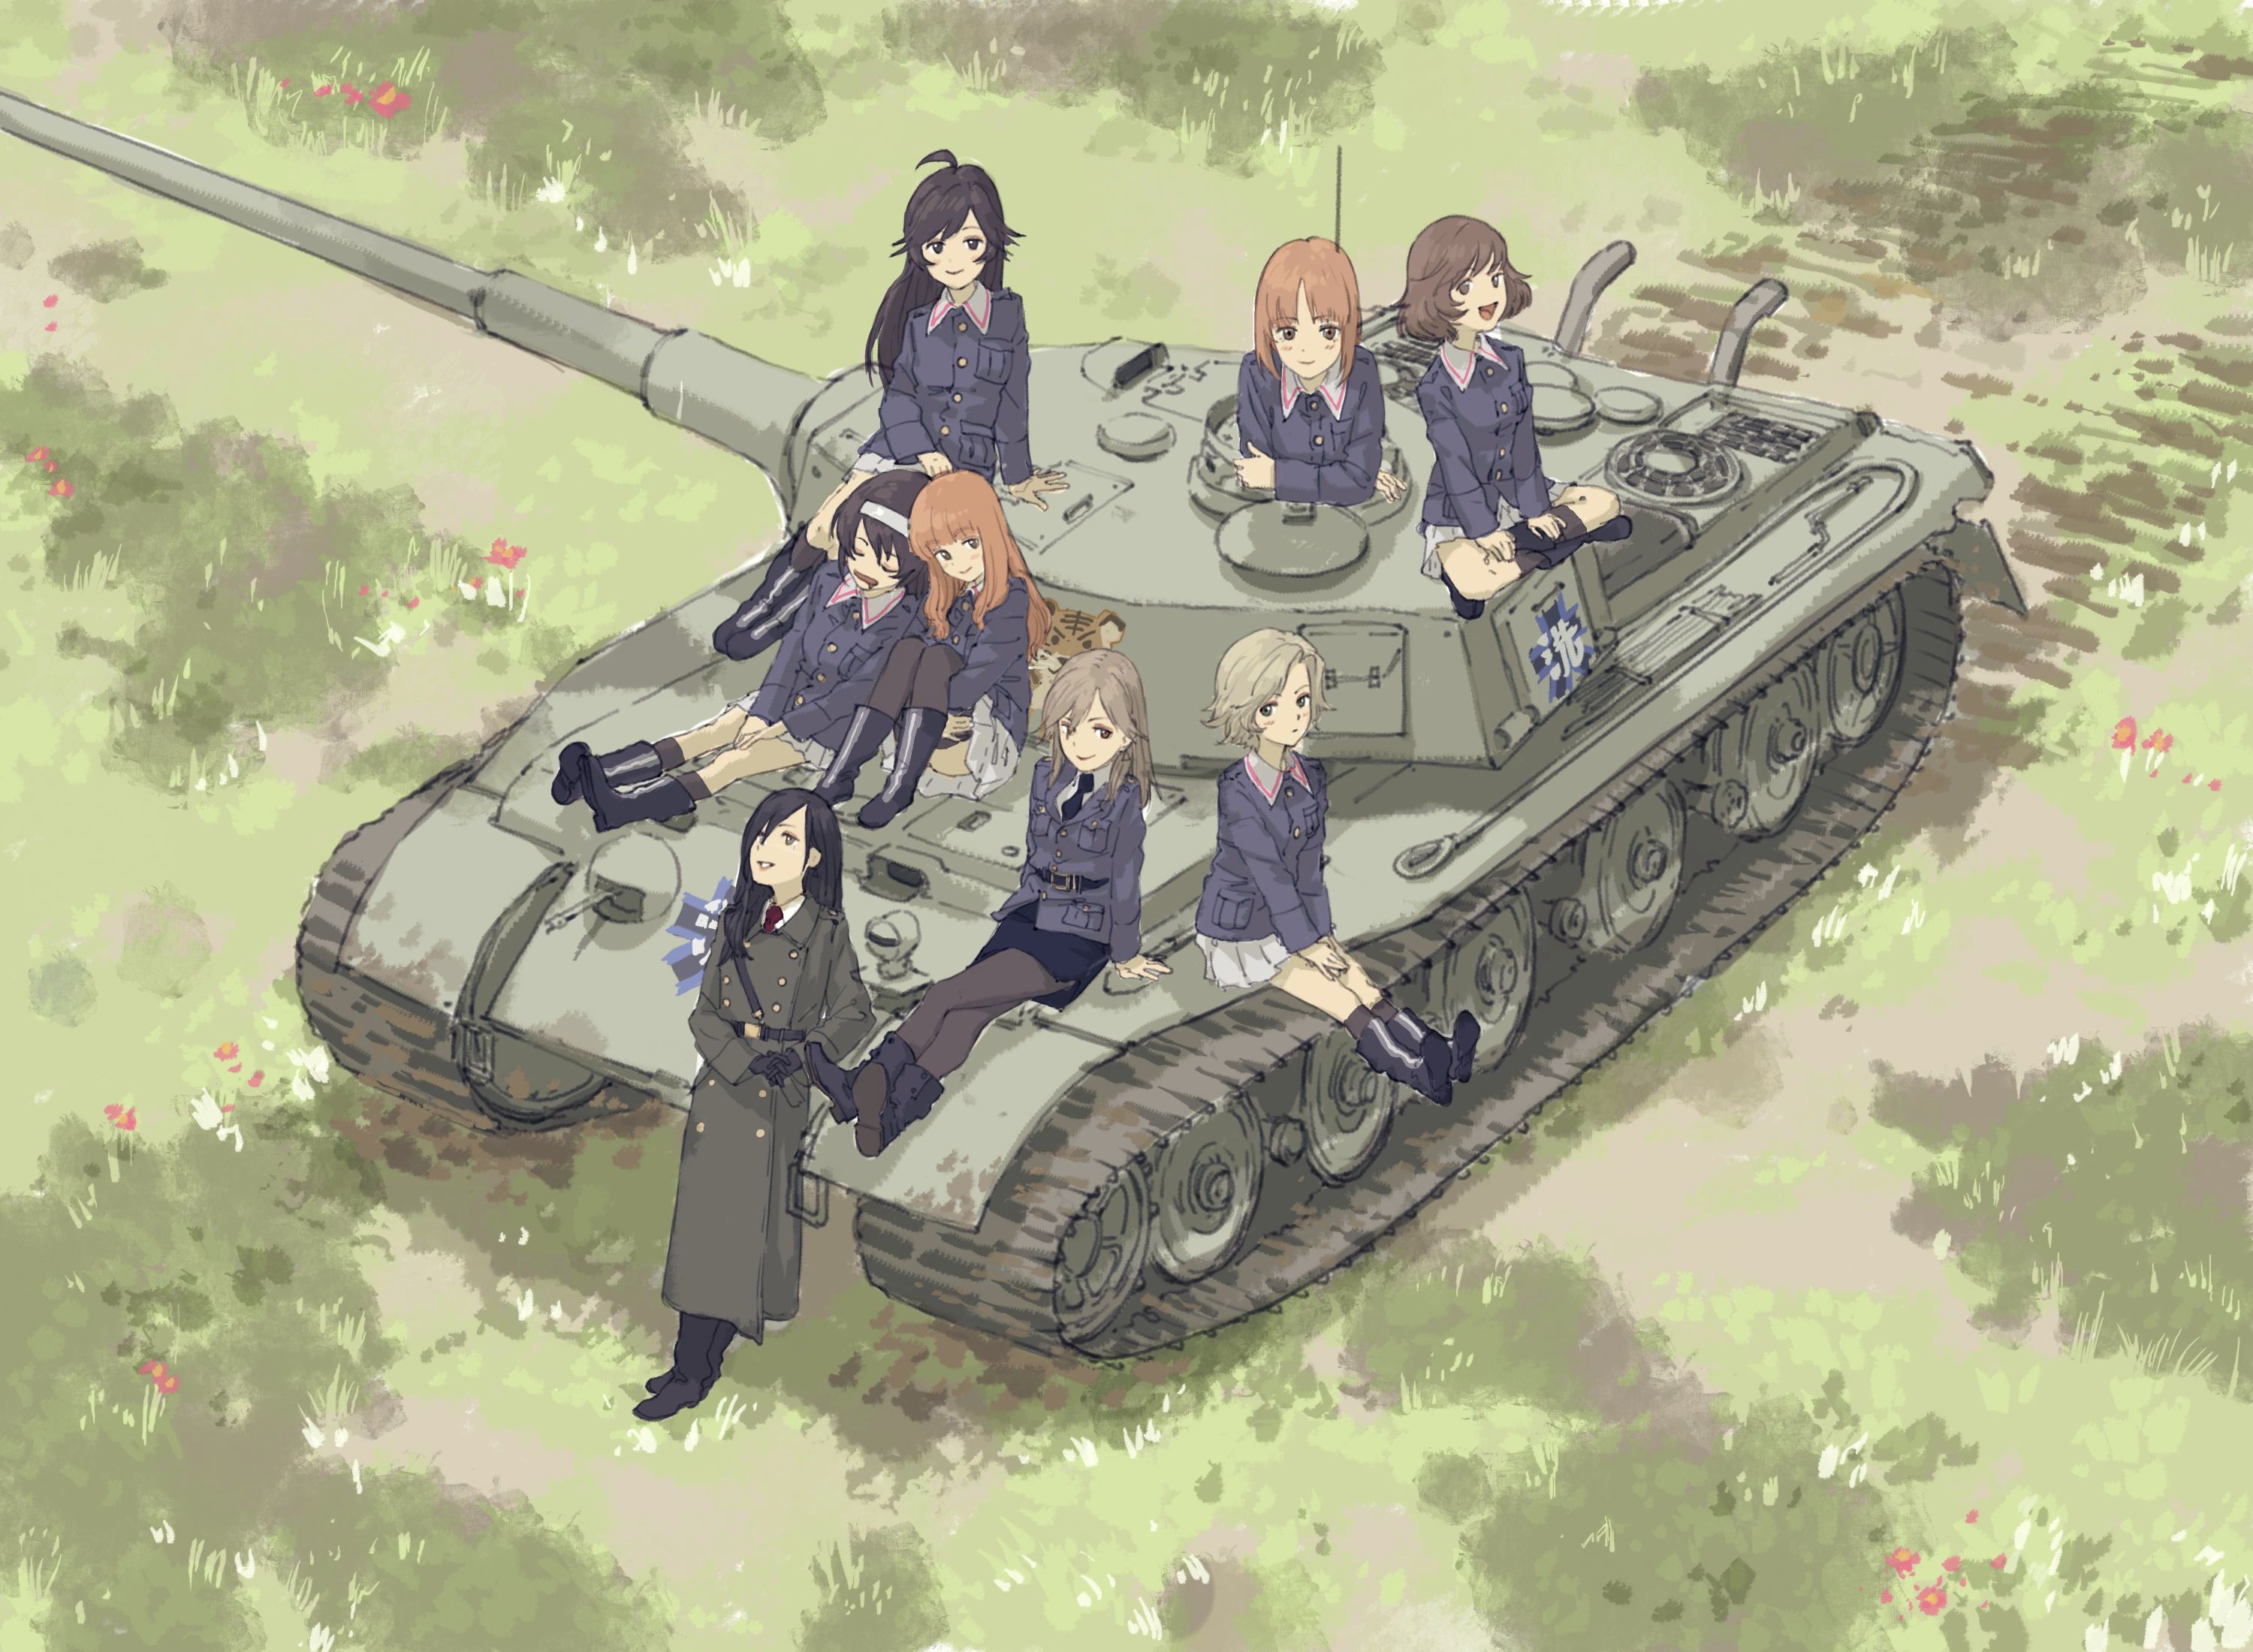 Anime Tanks Wallpapers